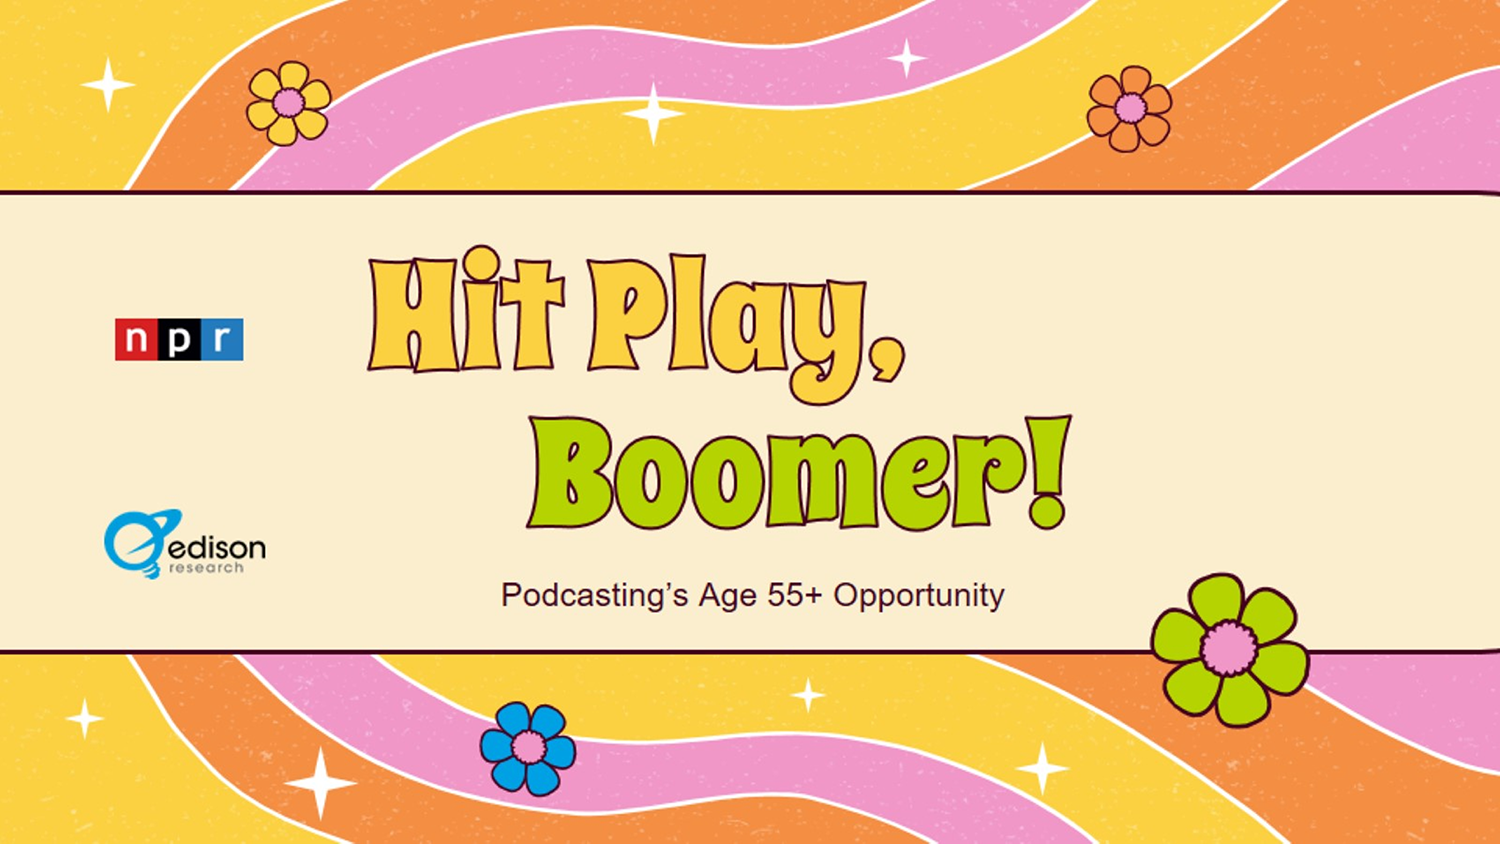 Hit Play, Boomer